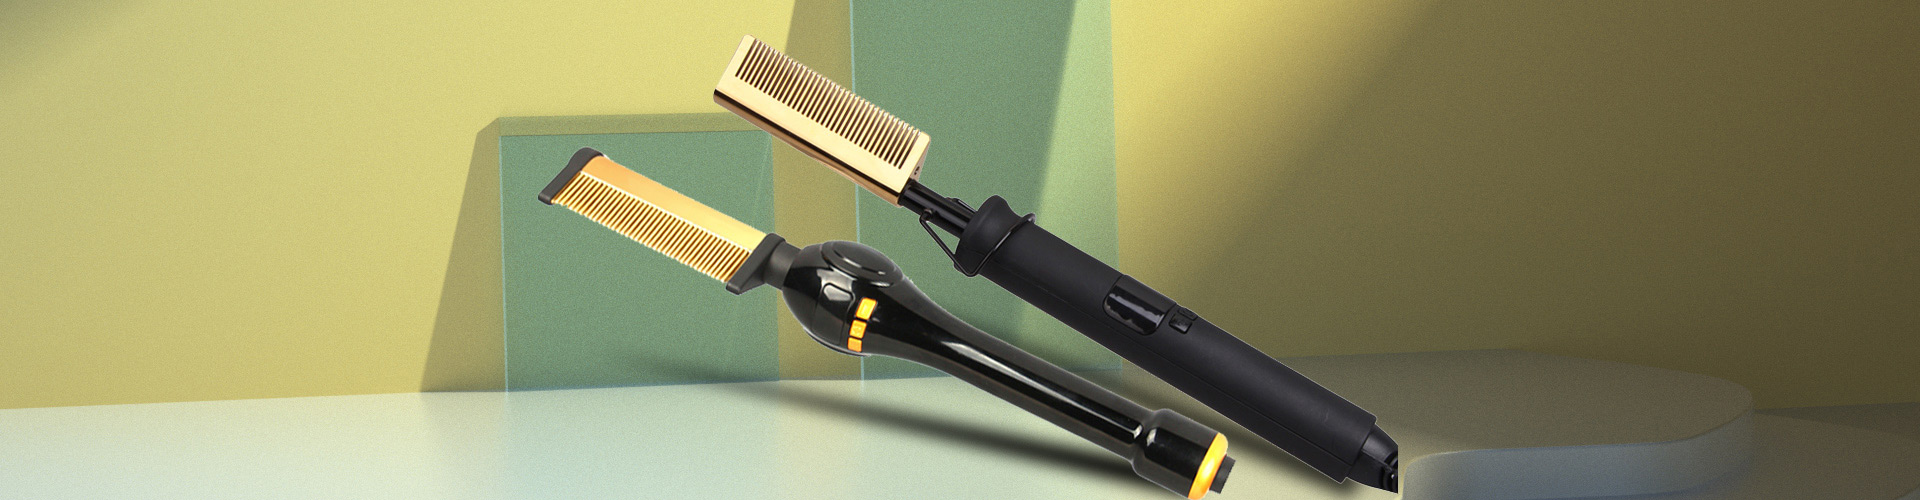 hair straightener comb